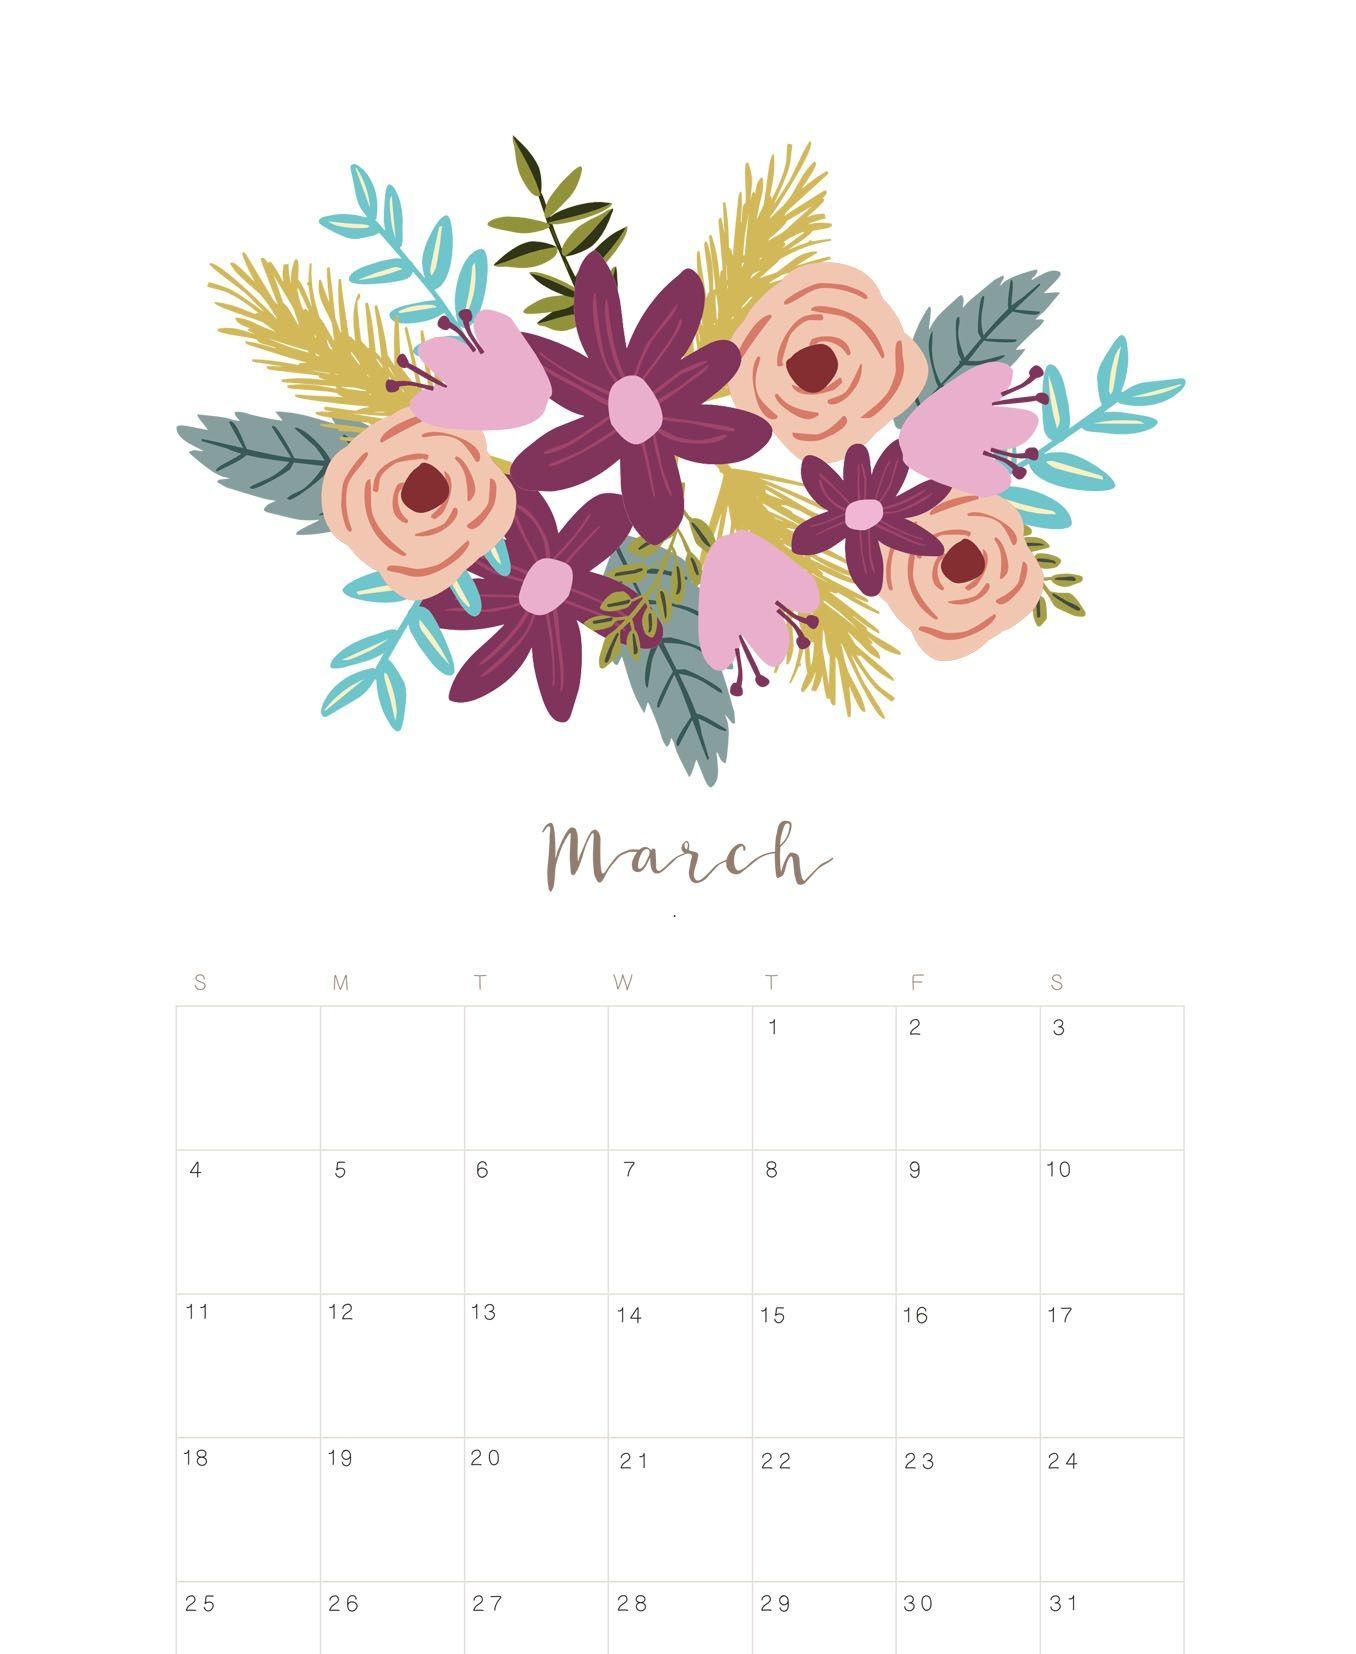 March 2018 Printable Calendar Wallpaper. Free Calendar and